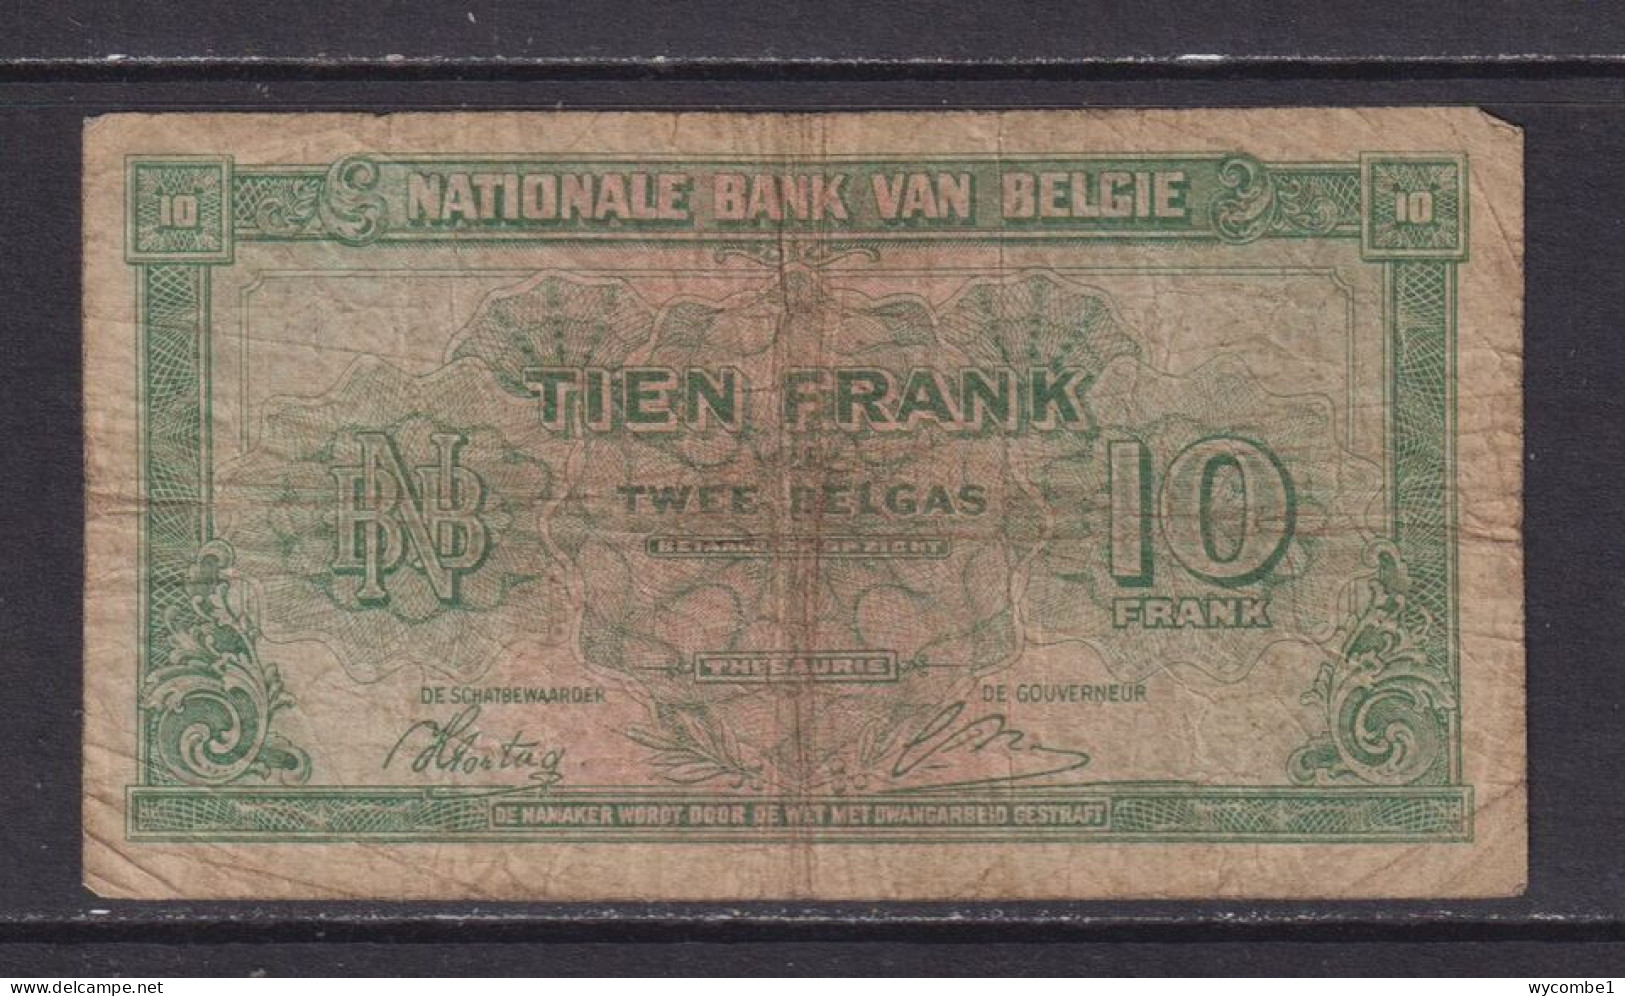 BELGIUM - 1943 10 Francs Circulated Banknote - 10 Francs-2 Belgas